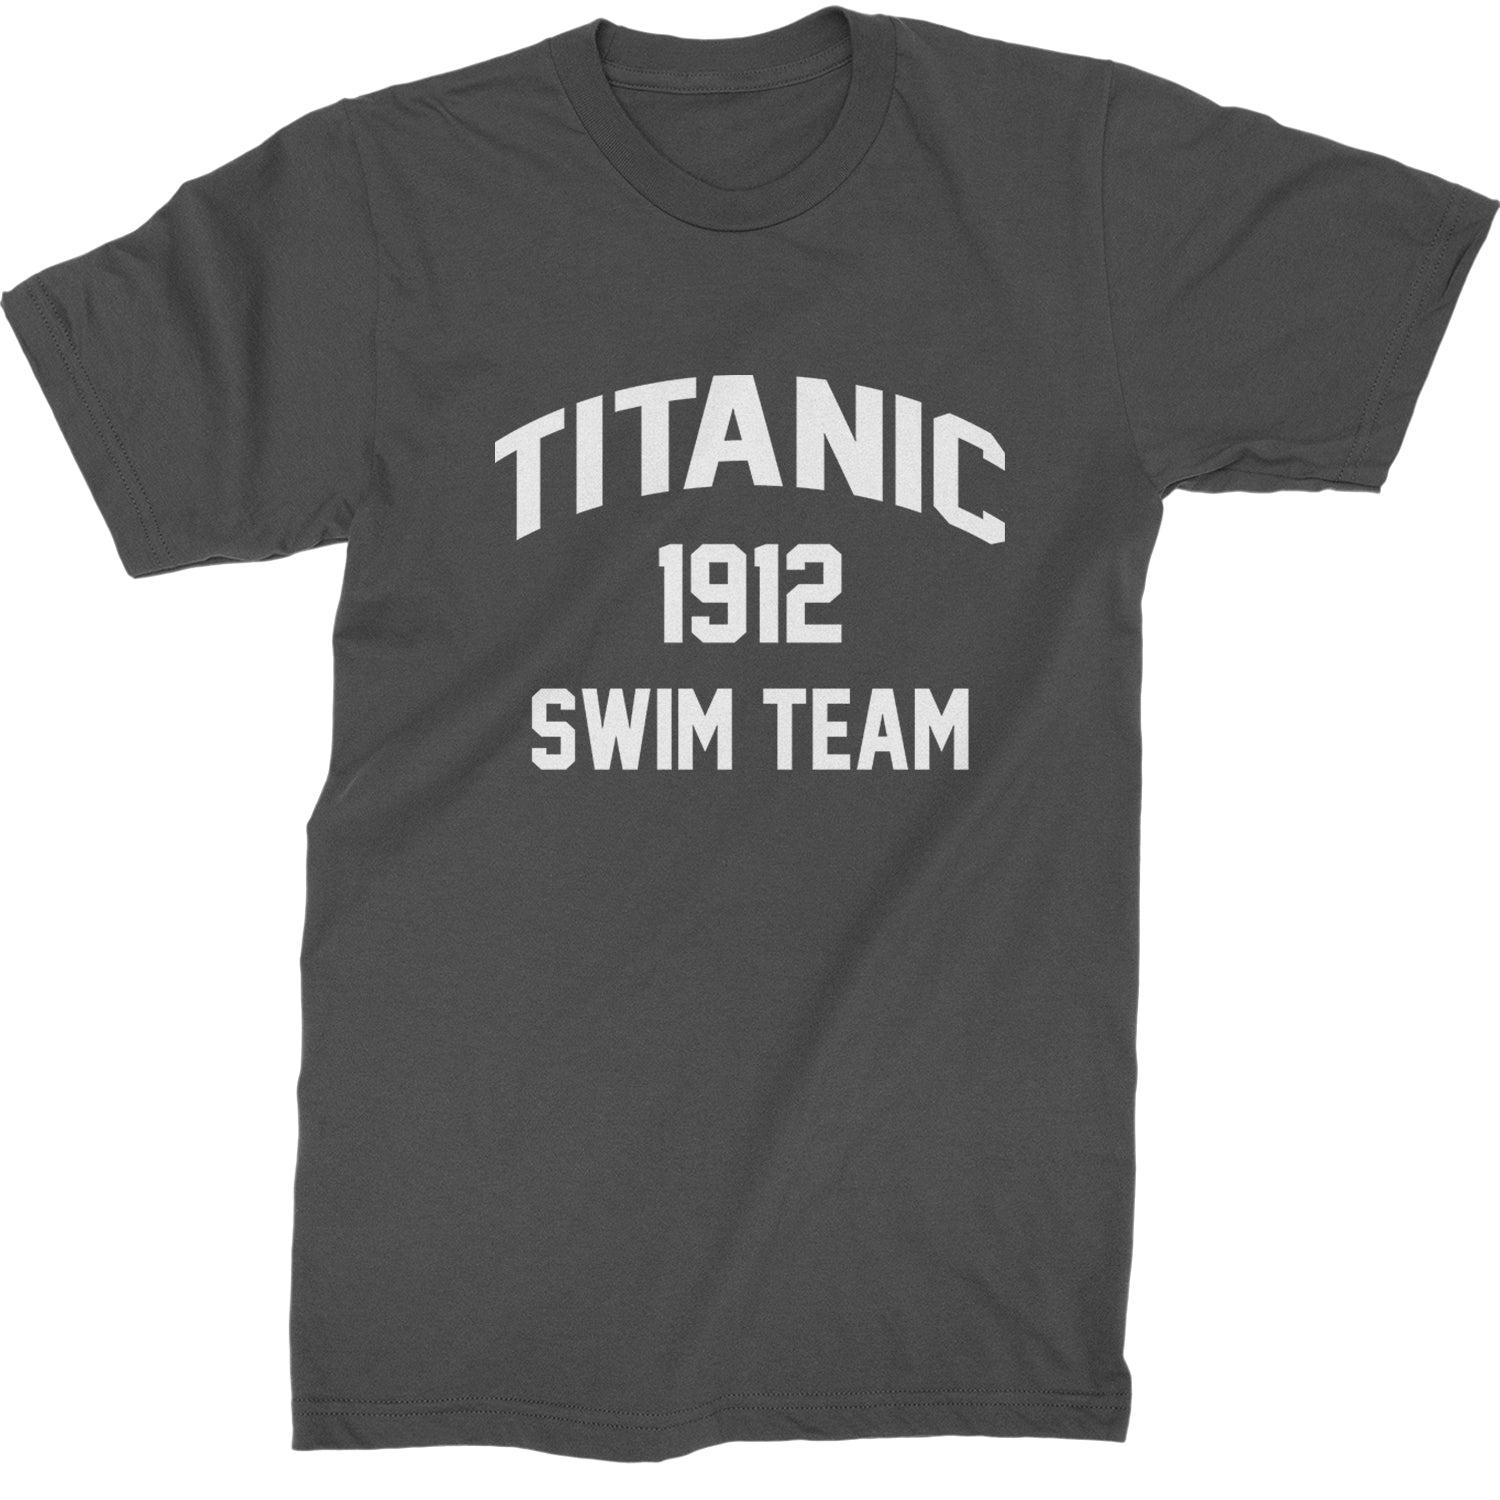 Titanic Swim Team 1912 Funny Cruise Mens T-shirt Black